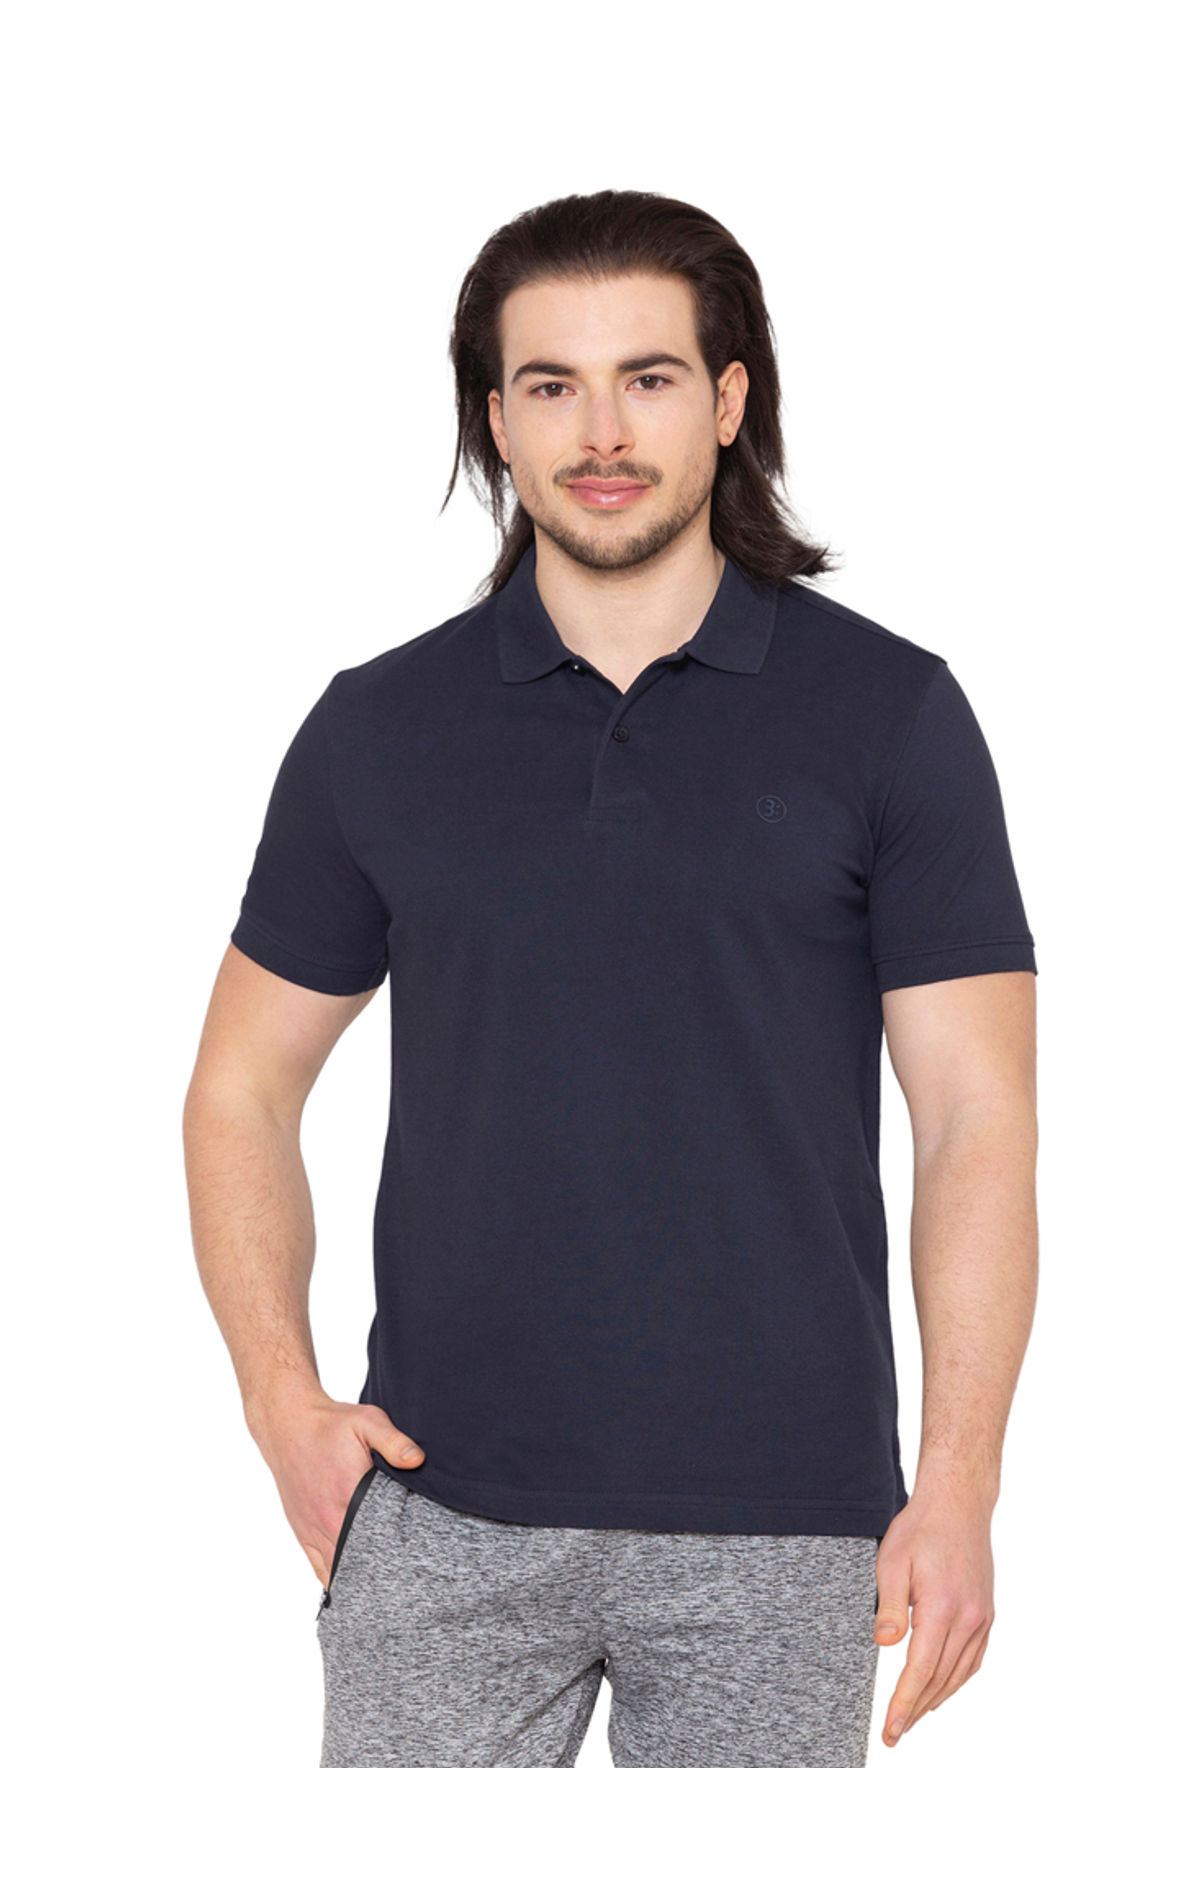 Bodyactive Solid Casual Half Sleeve Cotton Rich Pique Polo T-Shirt for ...